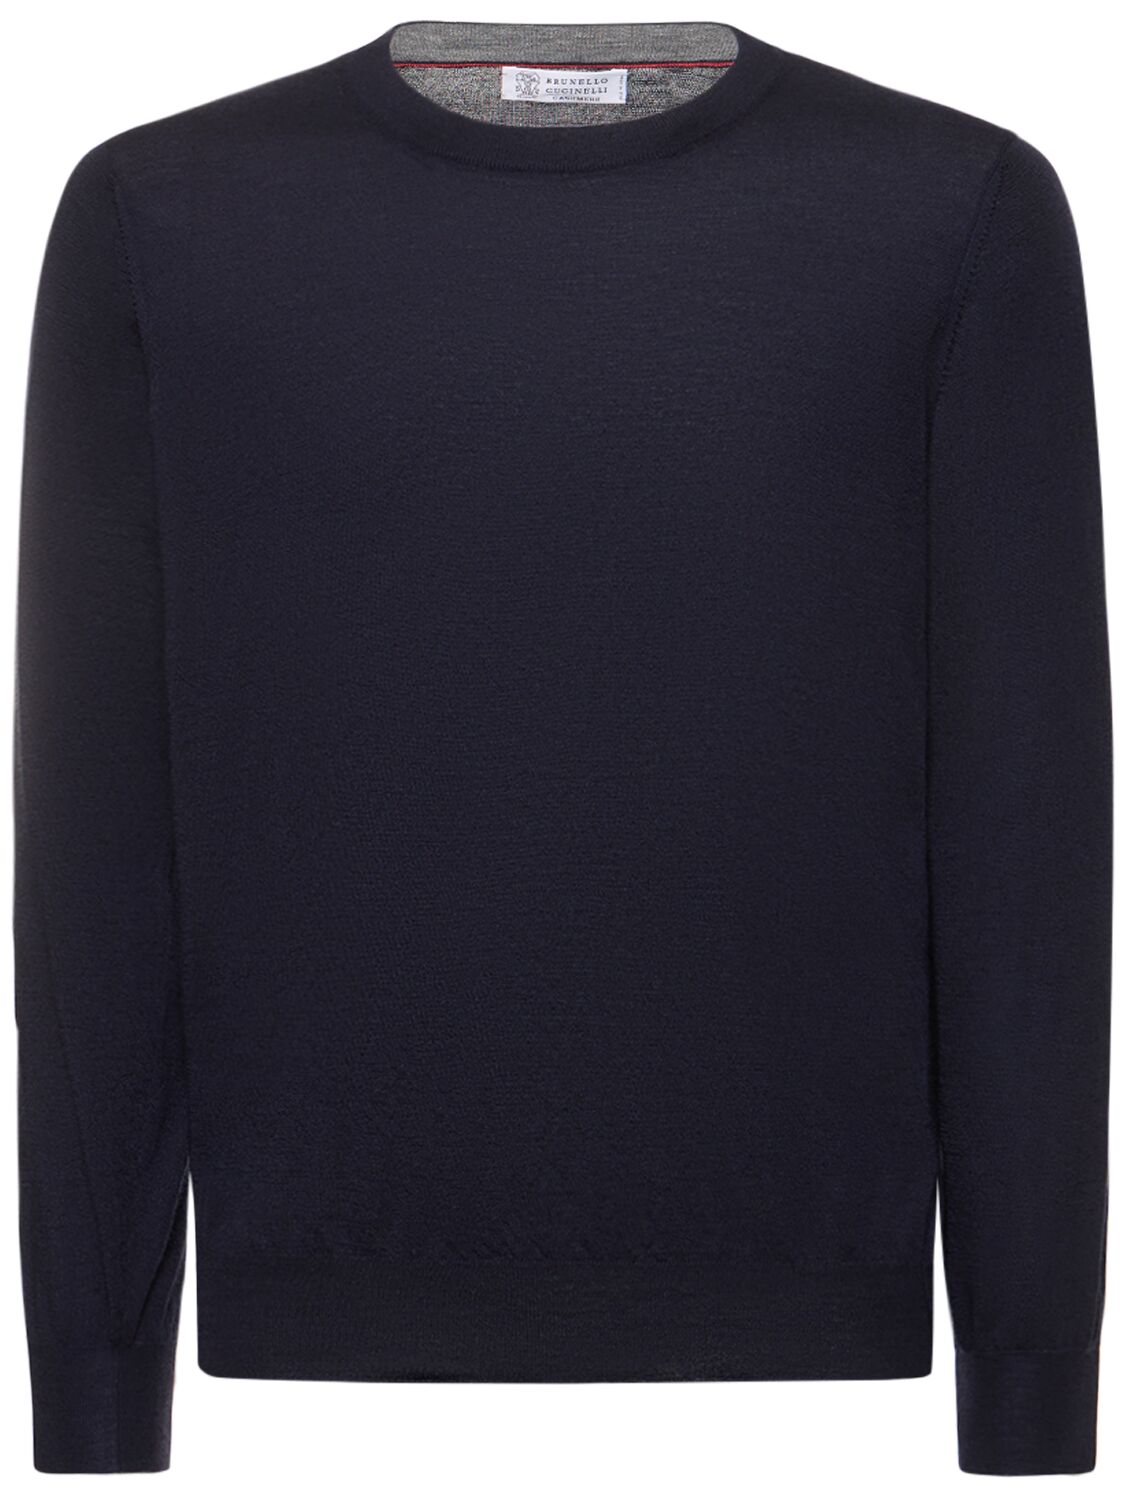 Image of Wool & Cashmere Crewneck Sweater